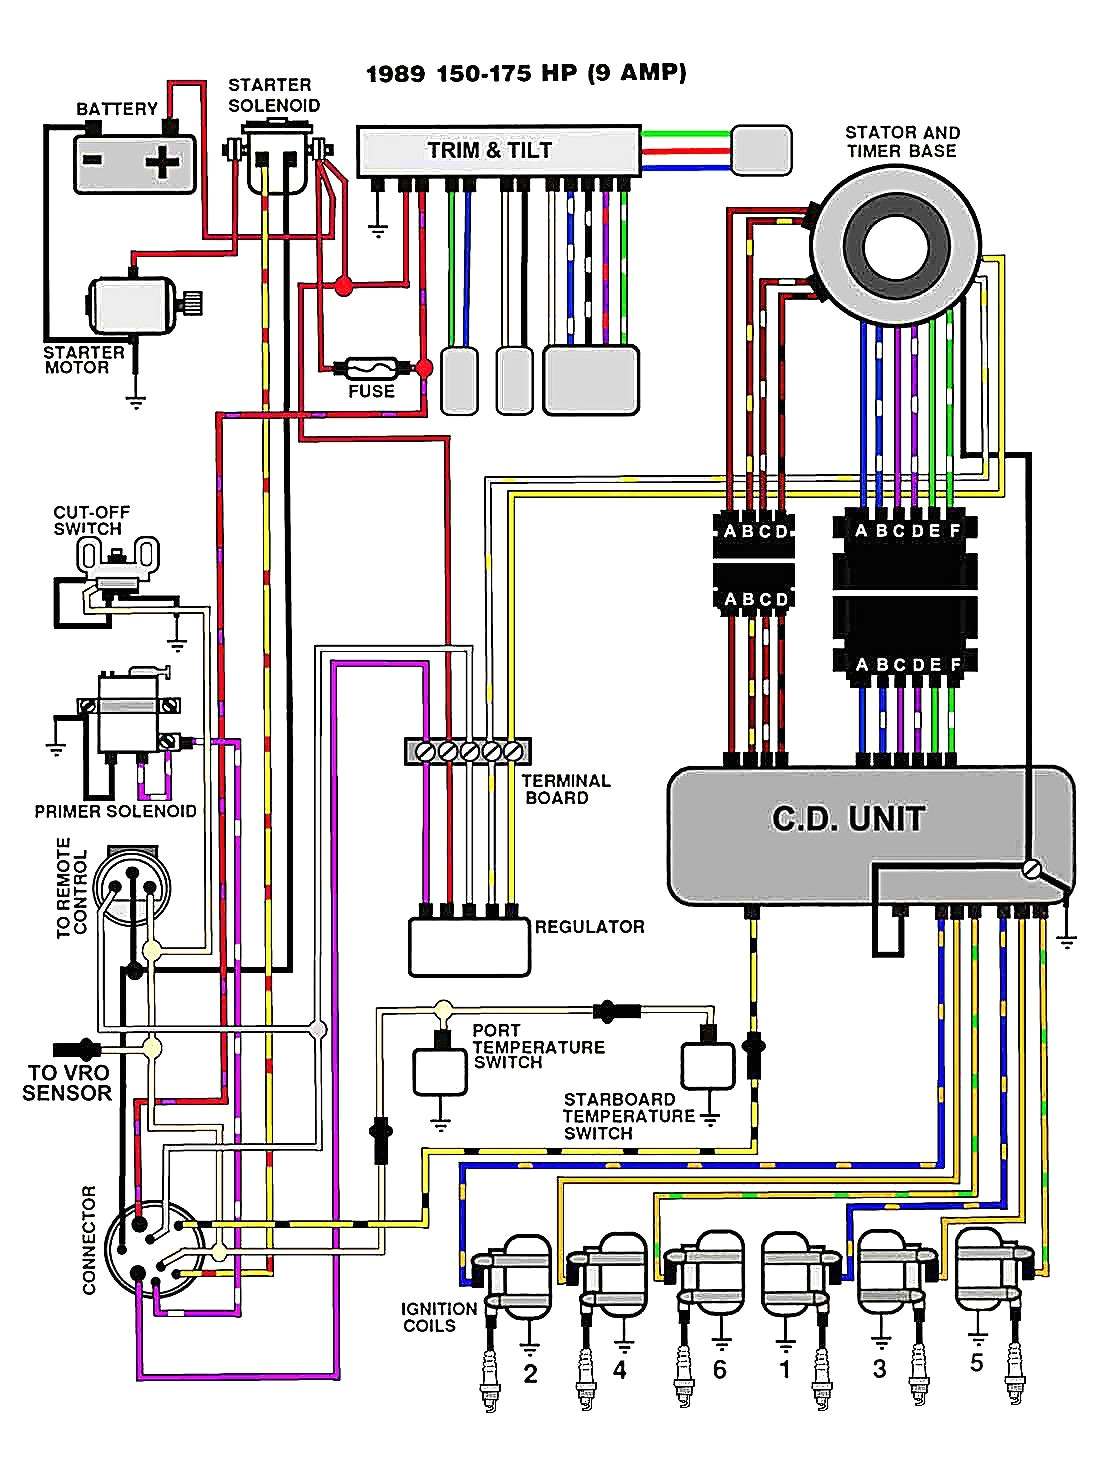 ezgo rxv light wiring diagram wiring diagram mega ezgo rxv light wiring diagram ezgo rxv light wiring diagram